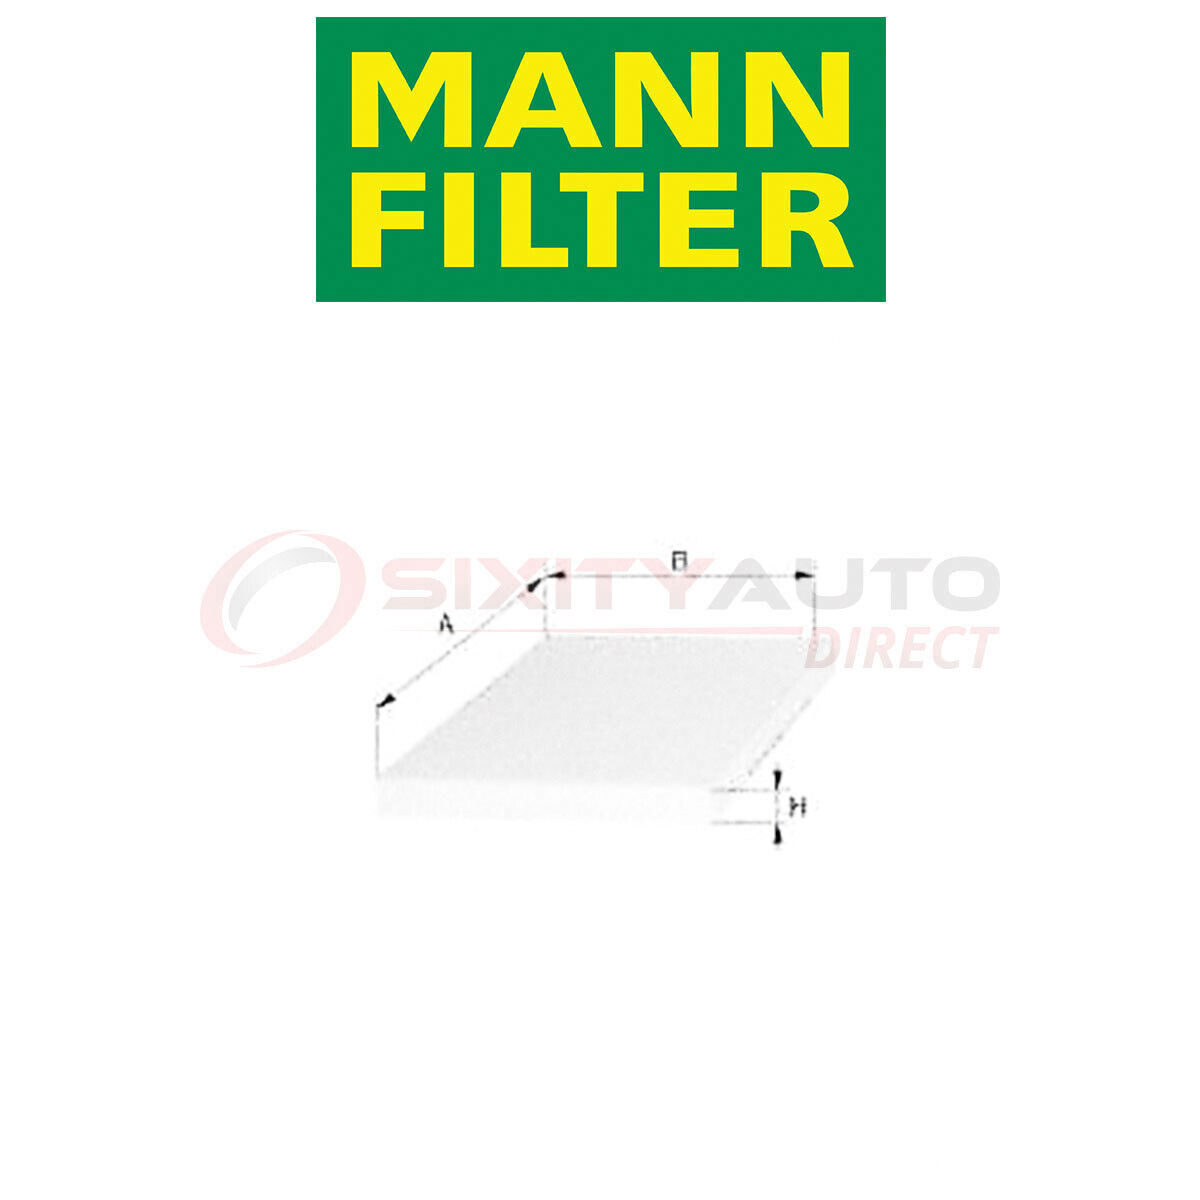 MANN FILTER CU3337 Cabin Air Filter for Filtration System op